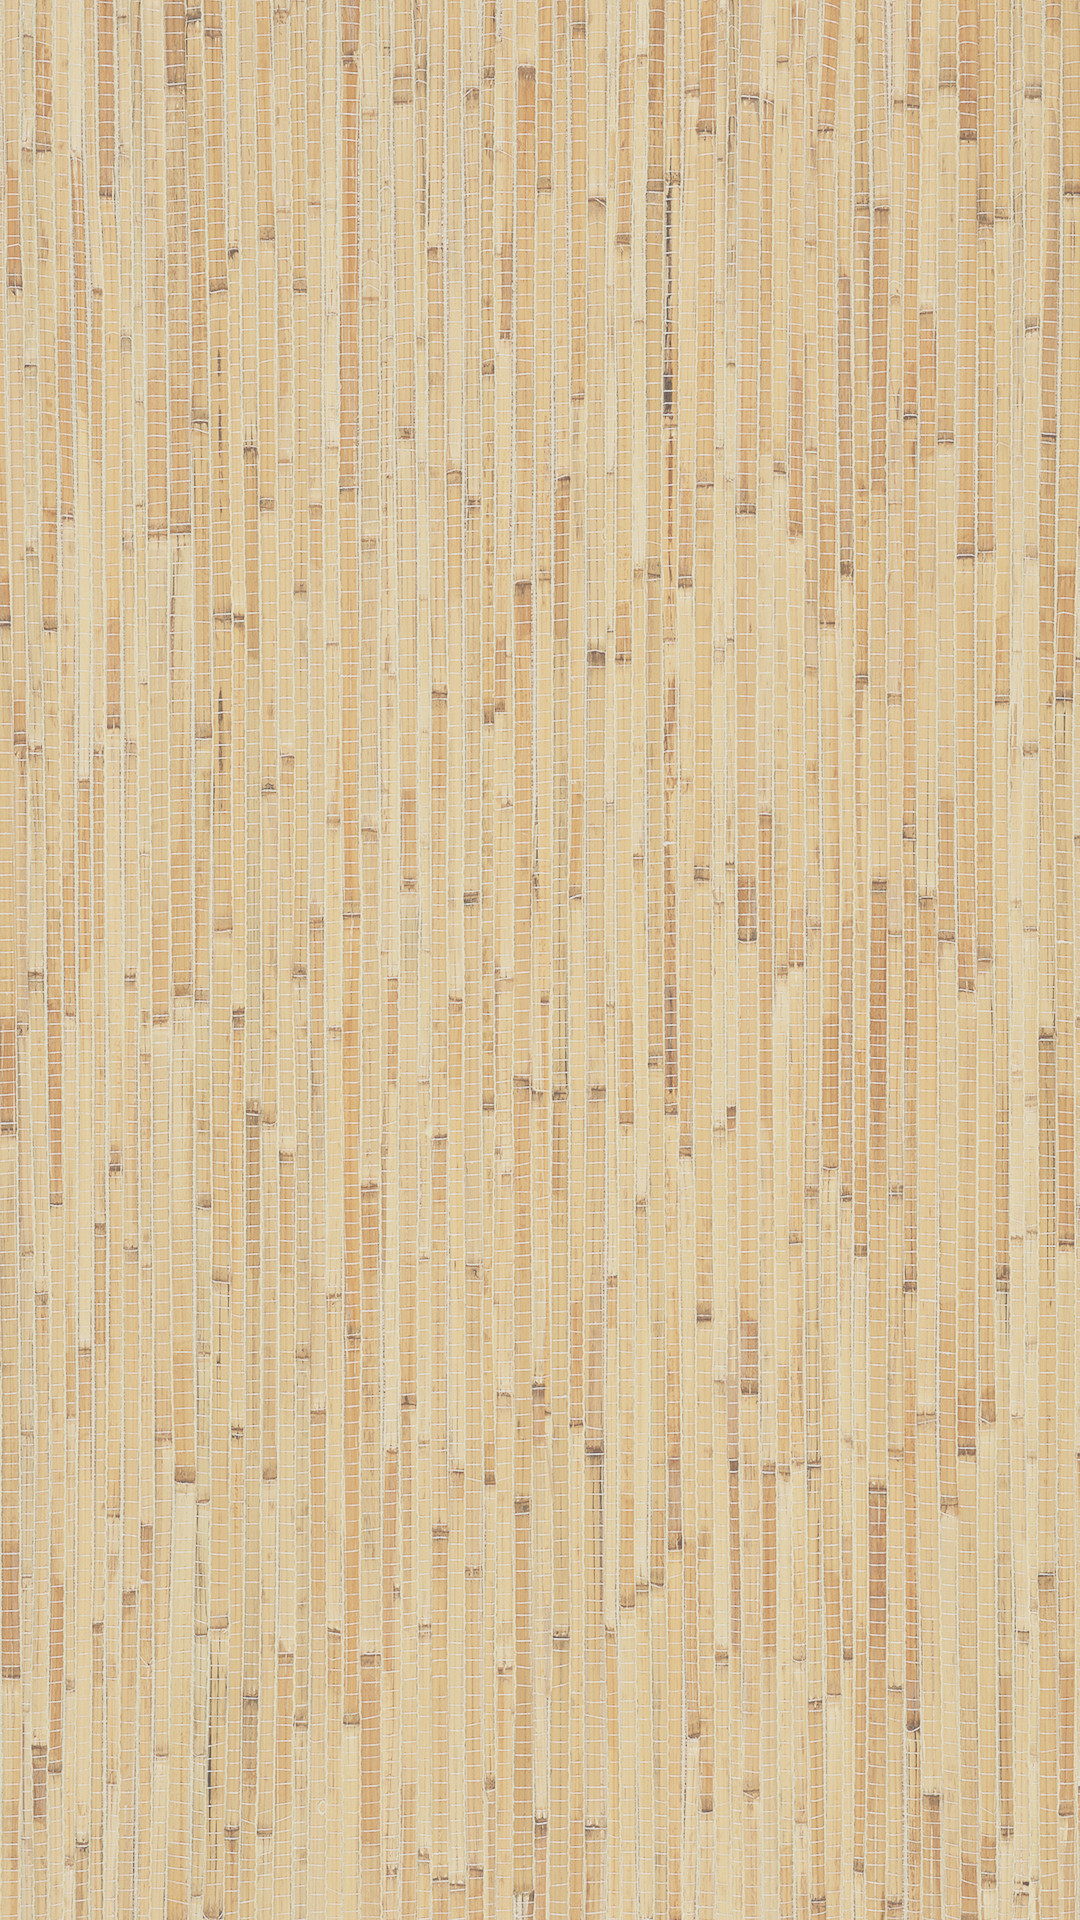 1080x1920 ABrowngrainpatternrainwood. iPhone 7 Plus Wallpaper